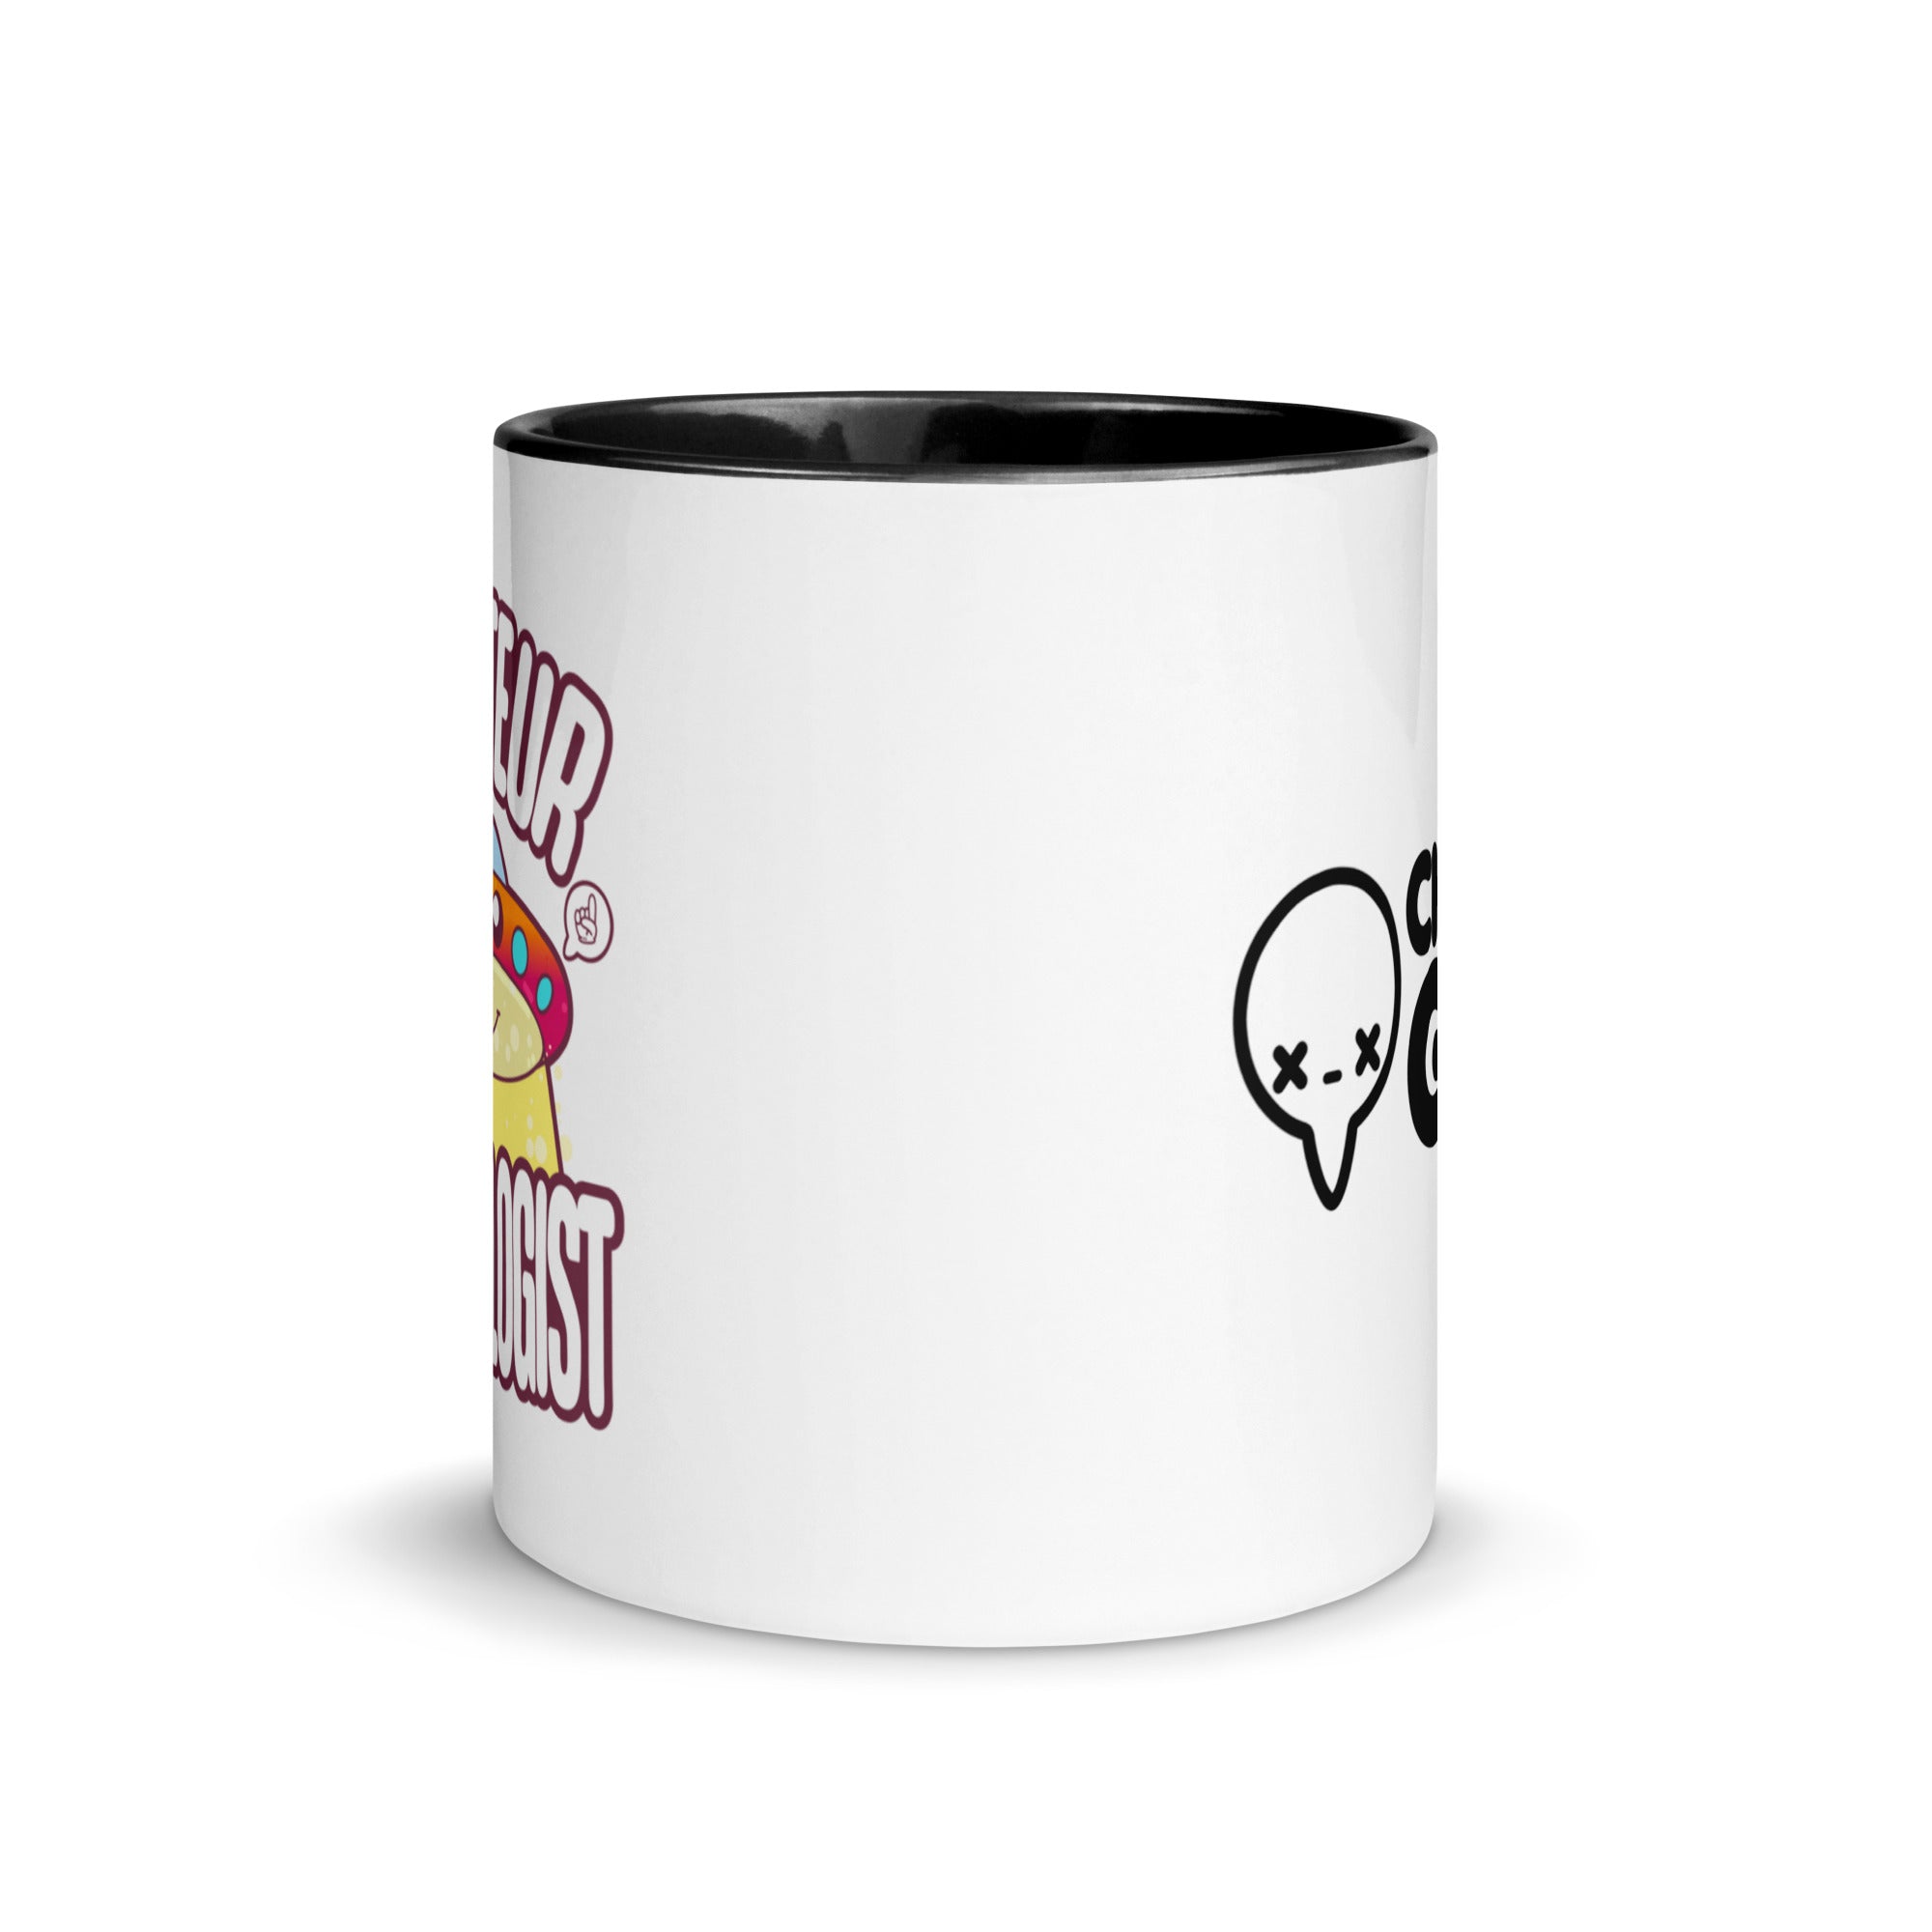 AMATEUR PROCTOLOGIST - Mug with Color Inside - ChubbleGumLLC